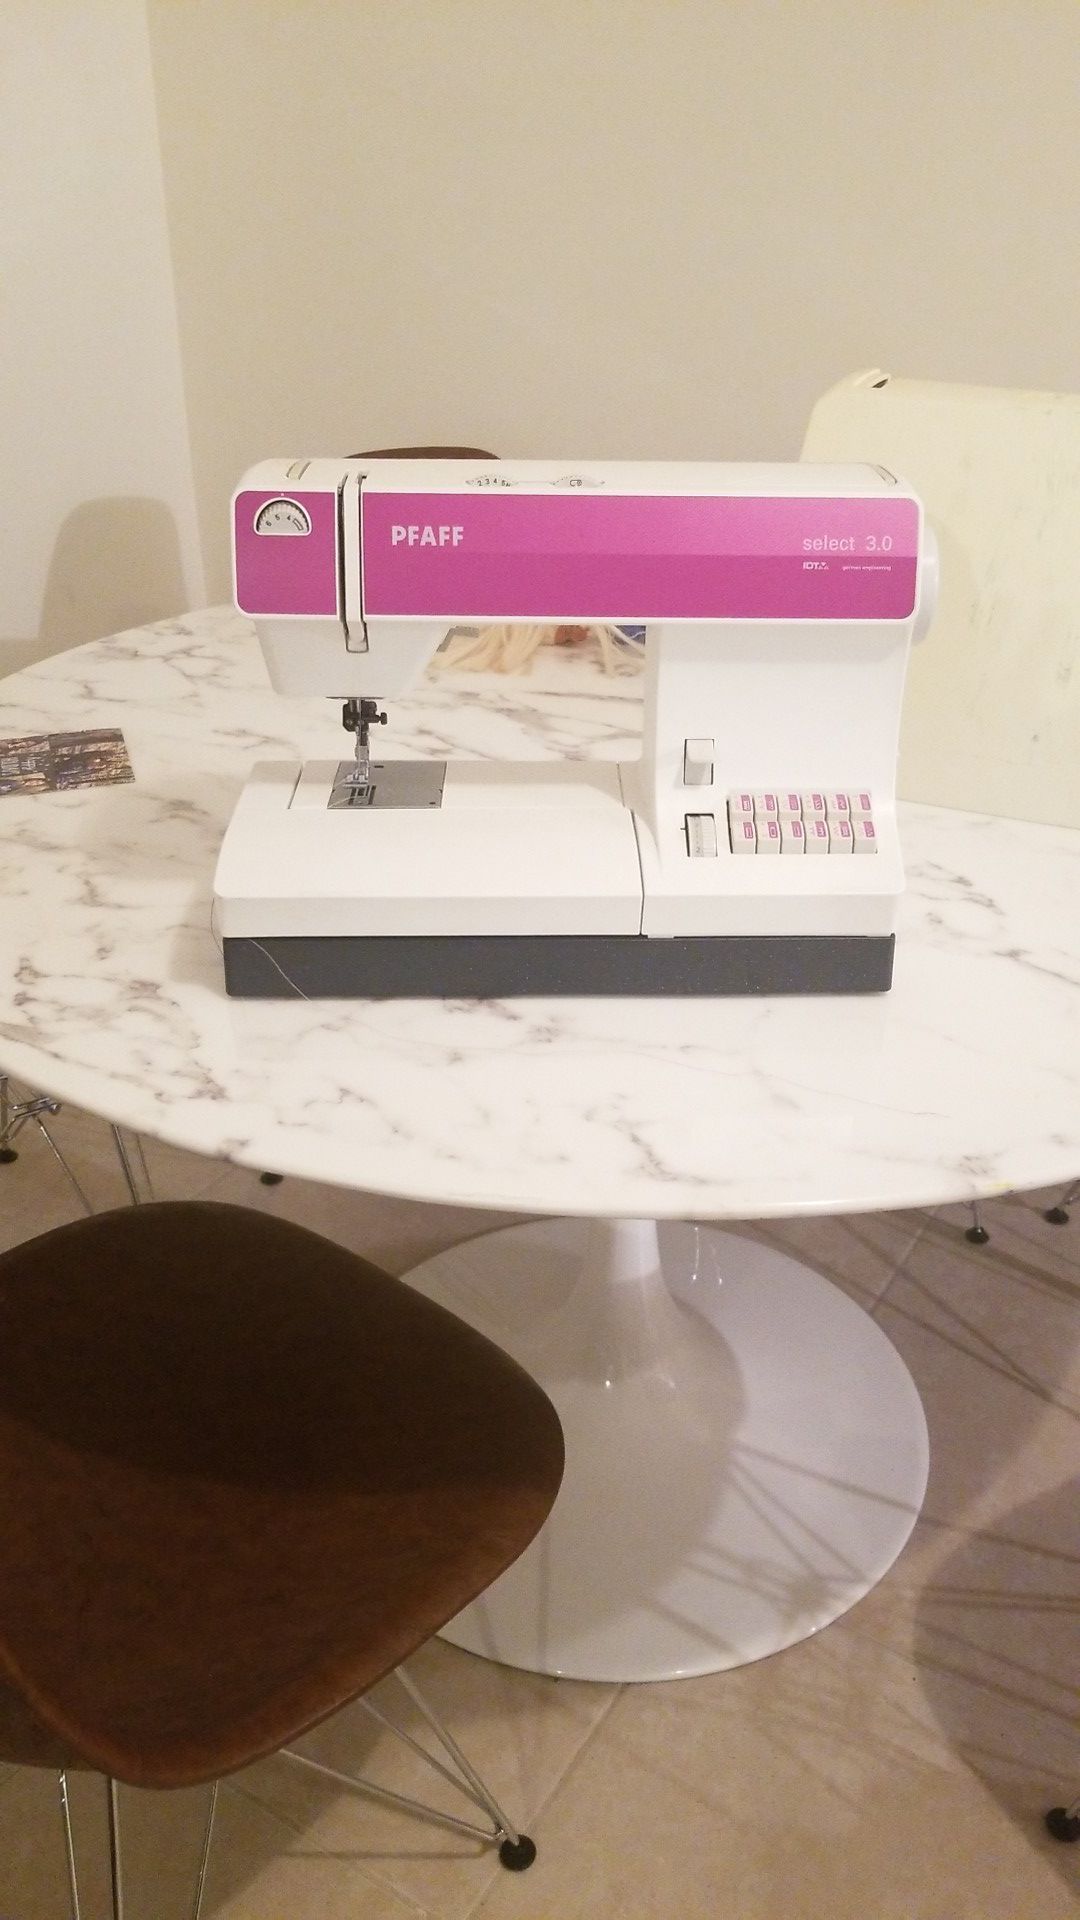 PFAFF sewing machine